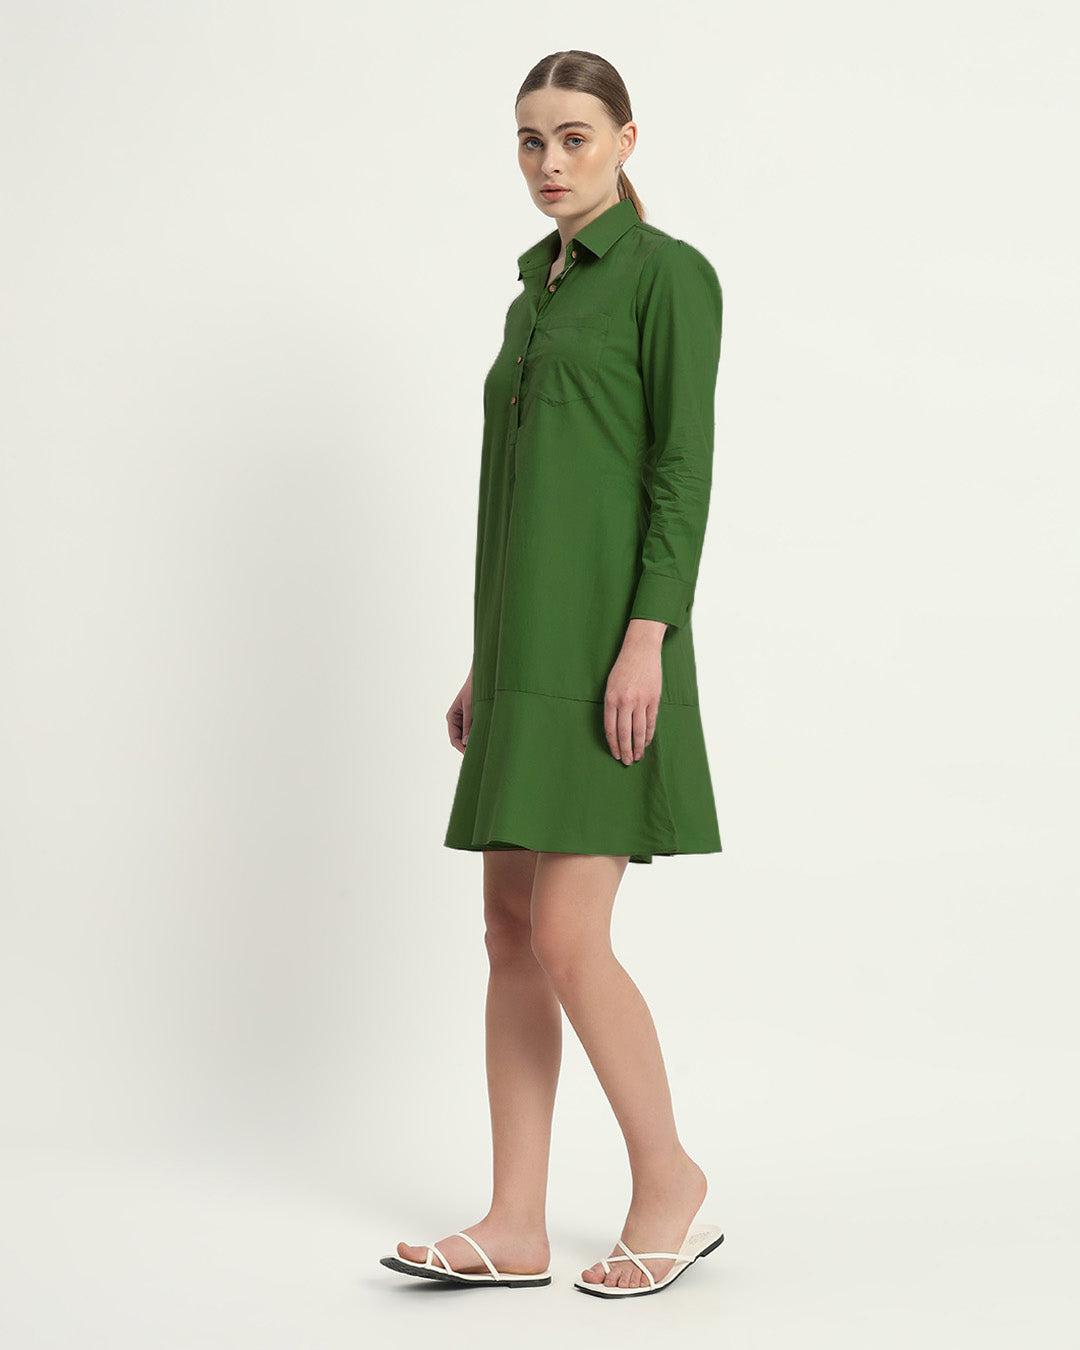 The Lyon Emerald Cotton Dress